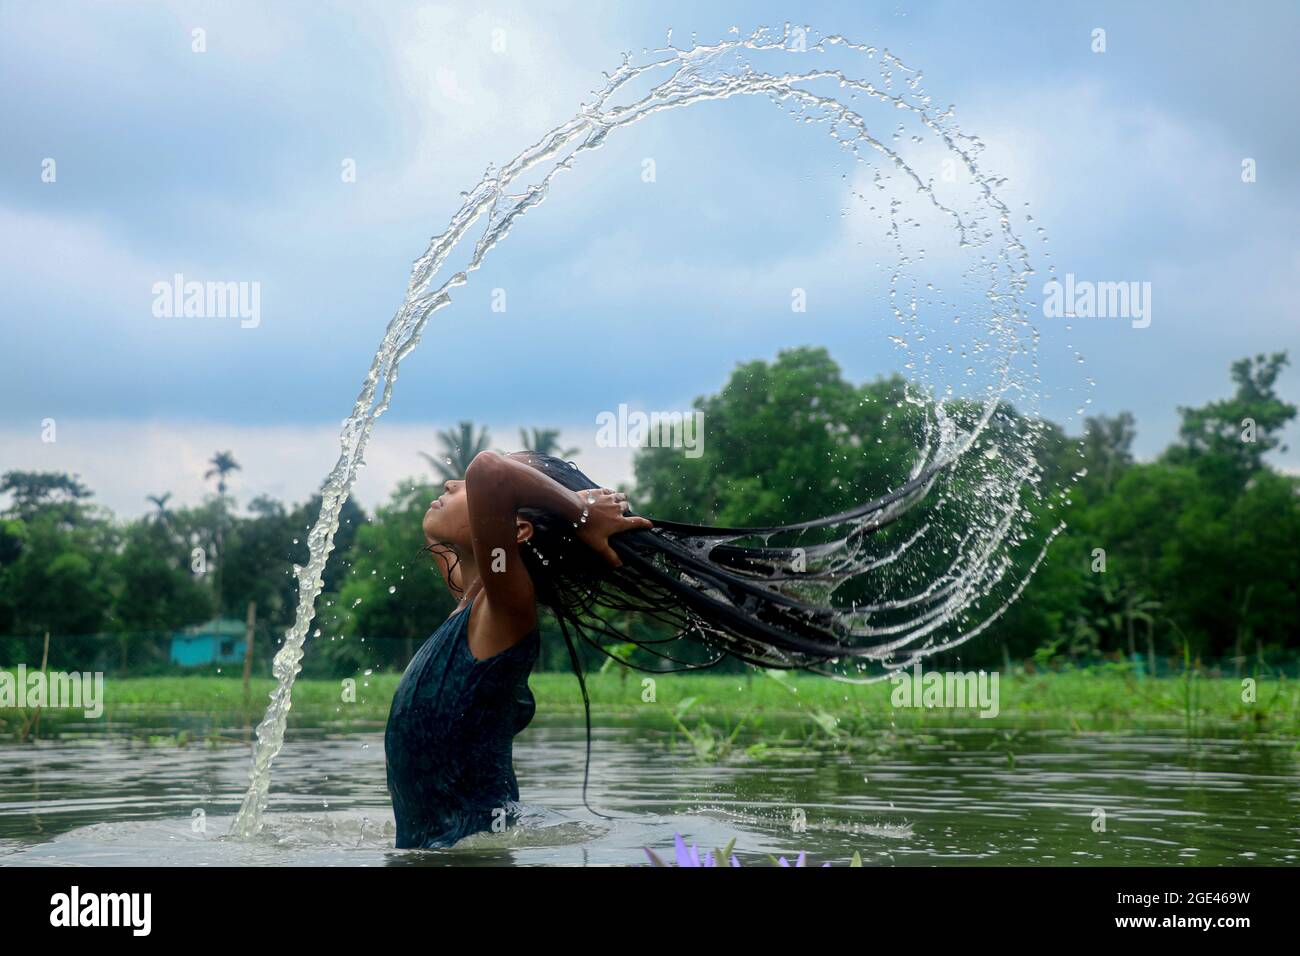 Children beauty with amazing splash of water . Stock Photo